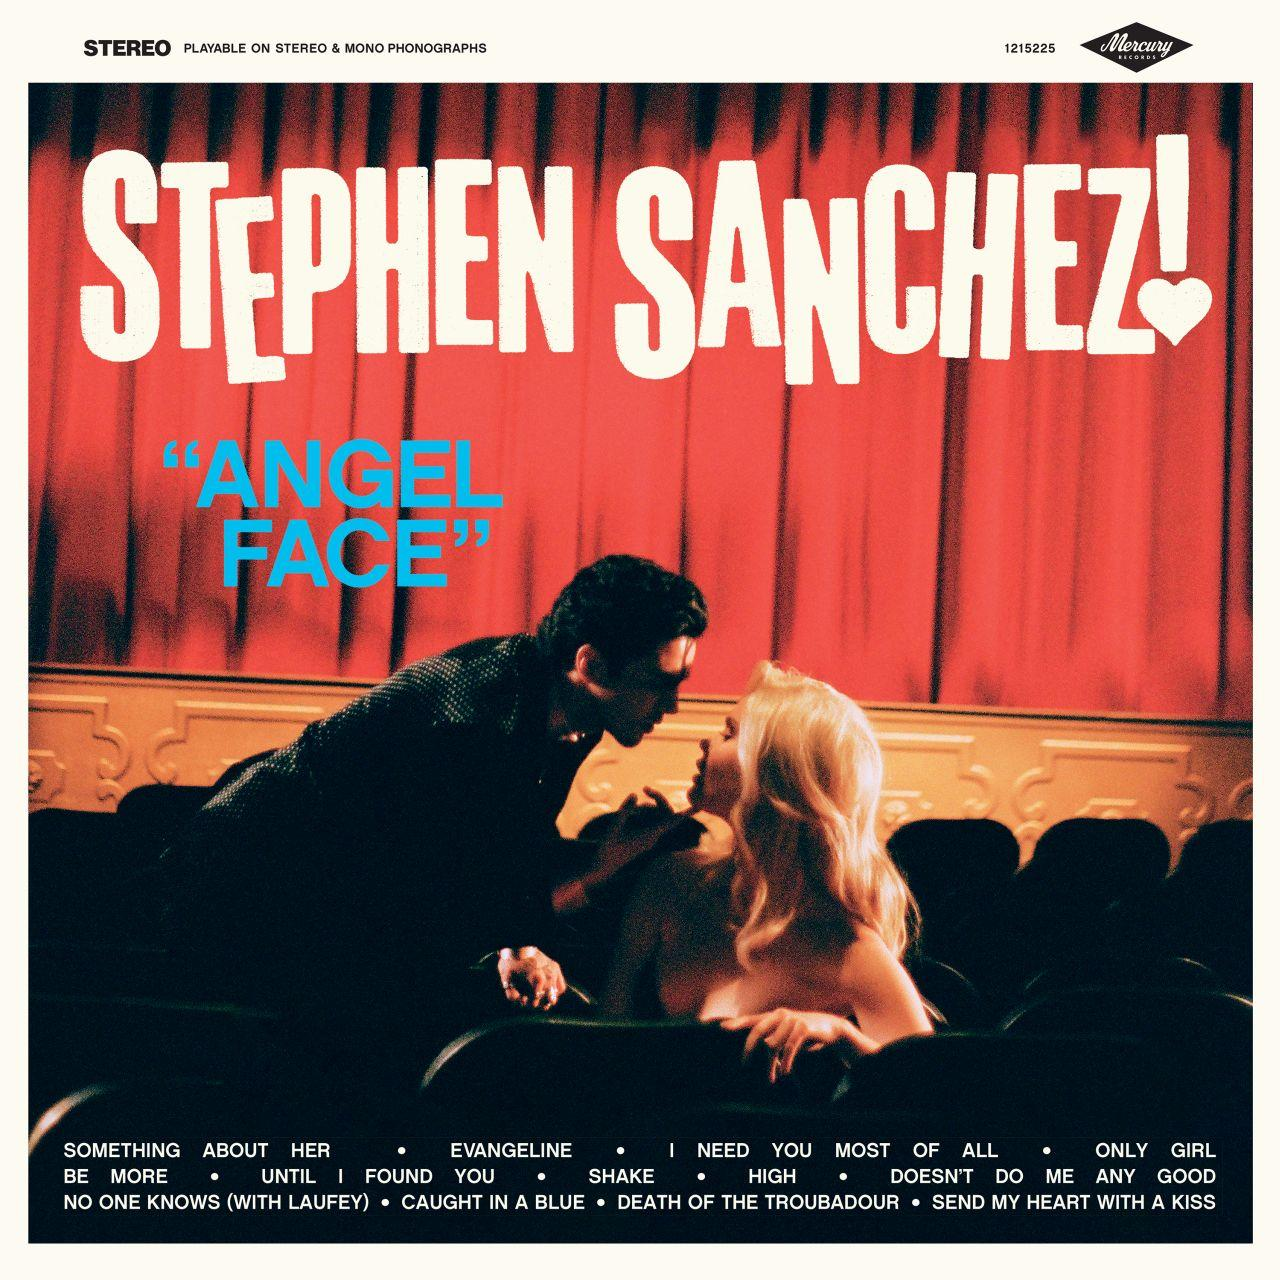 - Steven (Vinyl) Sanchez Face (STD. Vinyl) - Black Angel